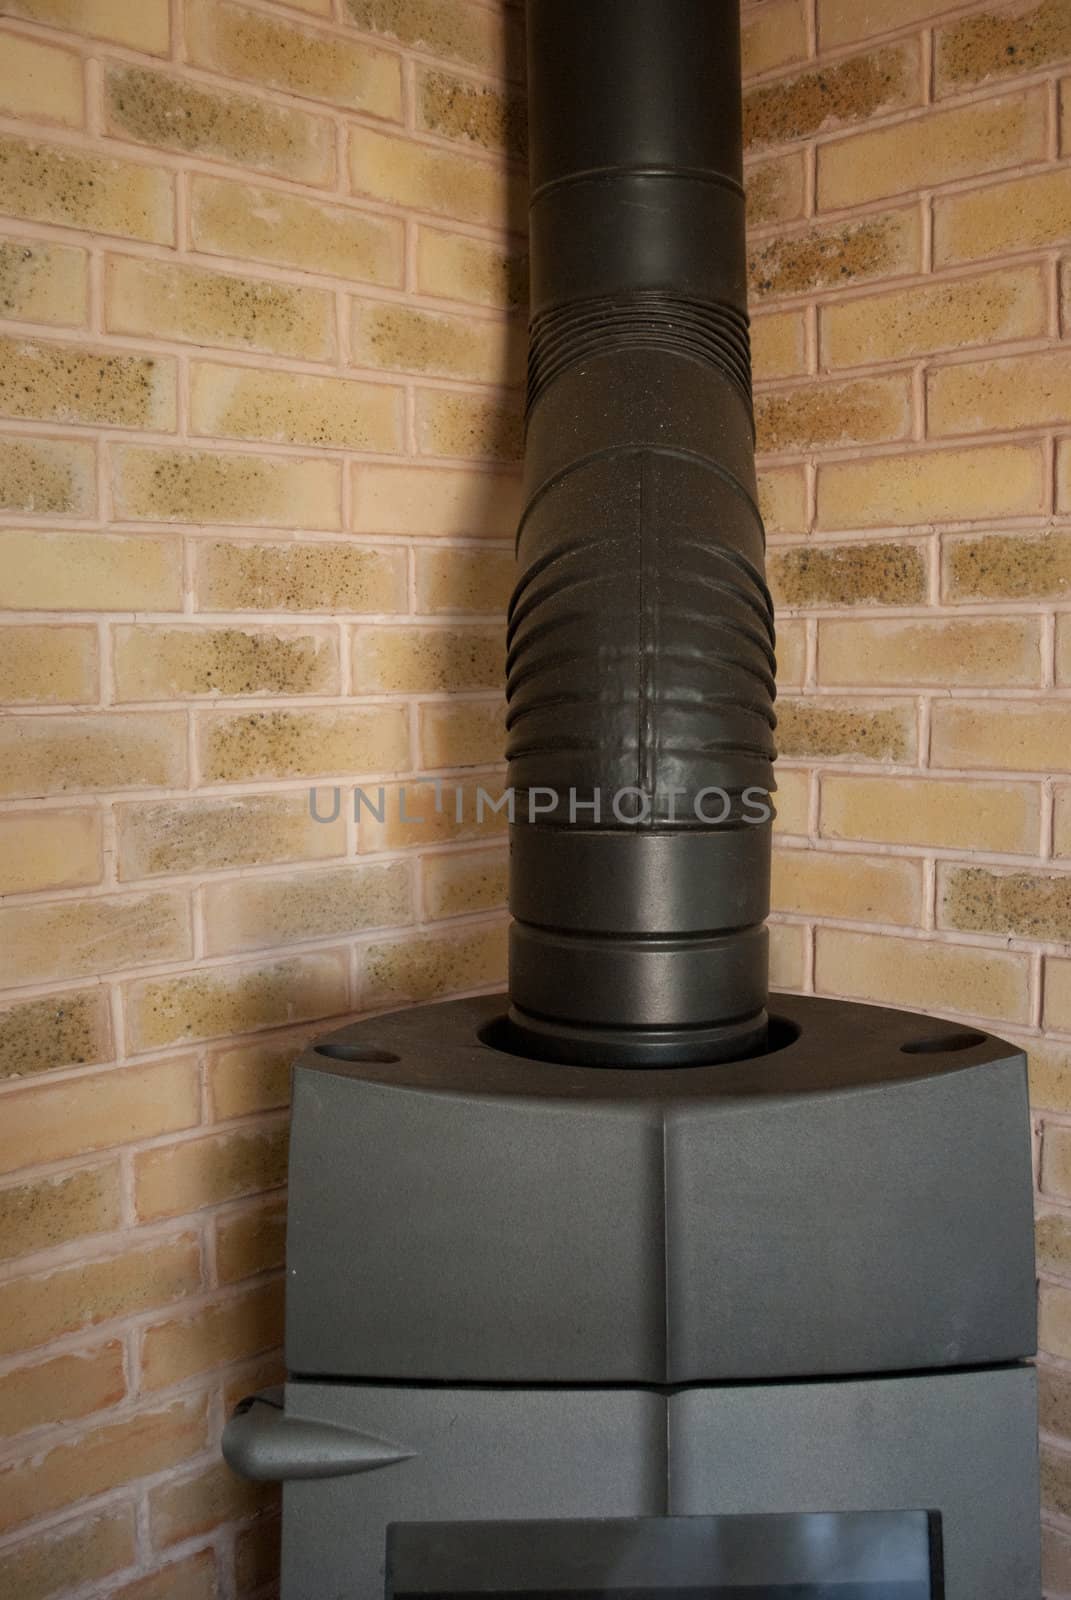 Heating stove next to a brickwall